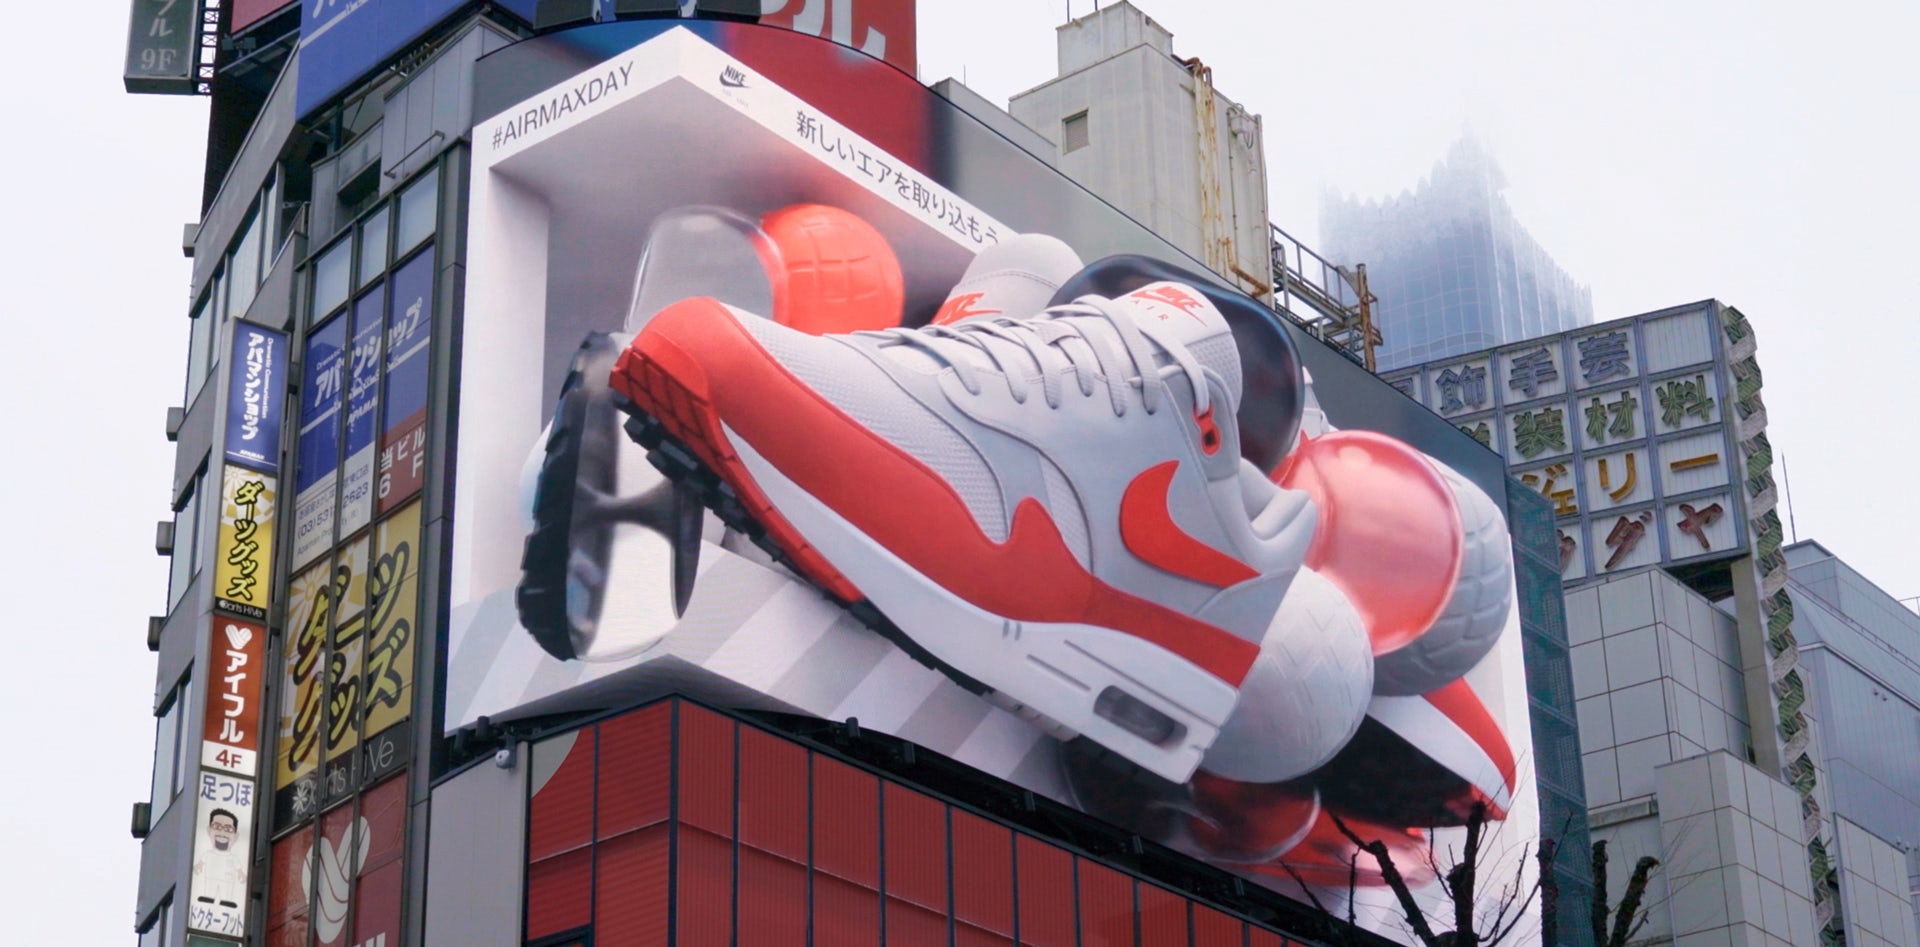 Nike celebrates Air Max Day with billboard